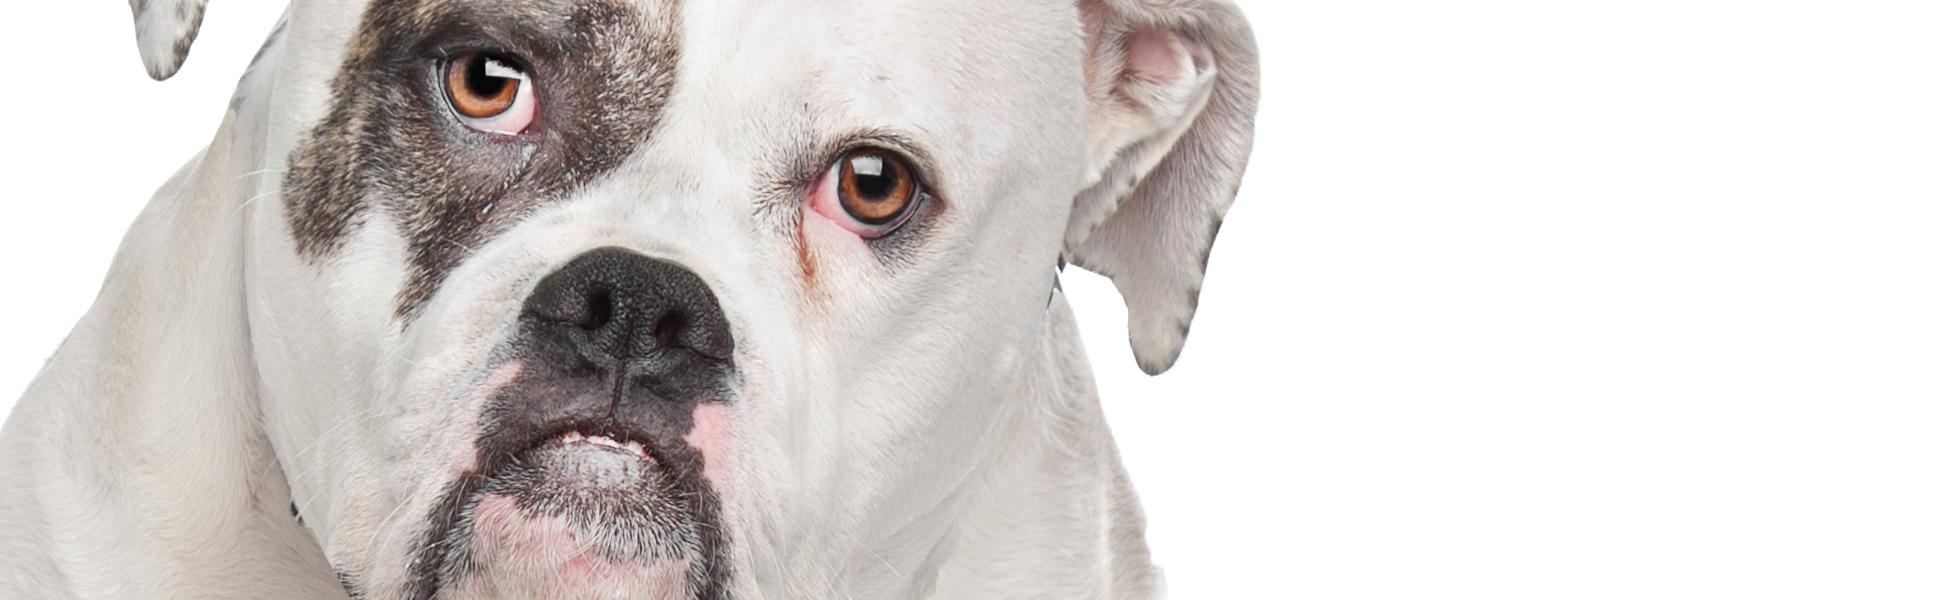 Amazon.com : The Blissful Dog American Bulldog Nose Butter ...